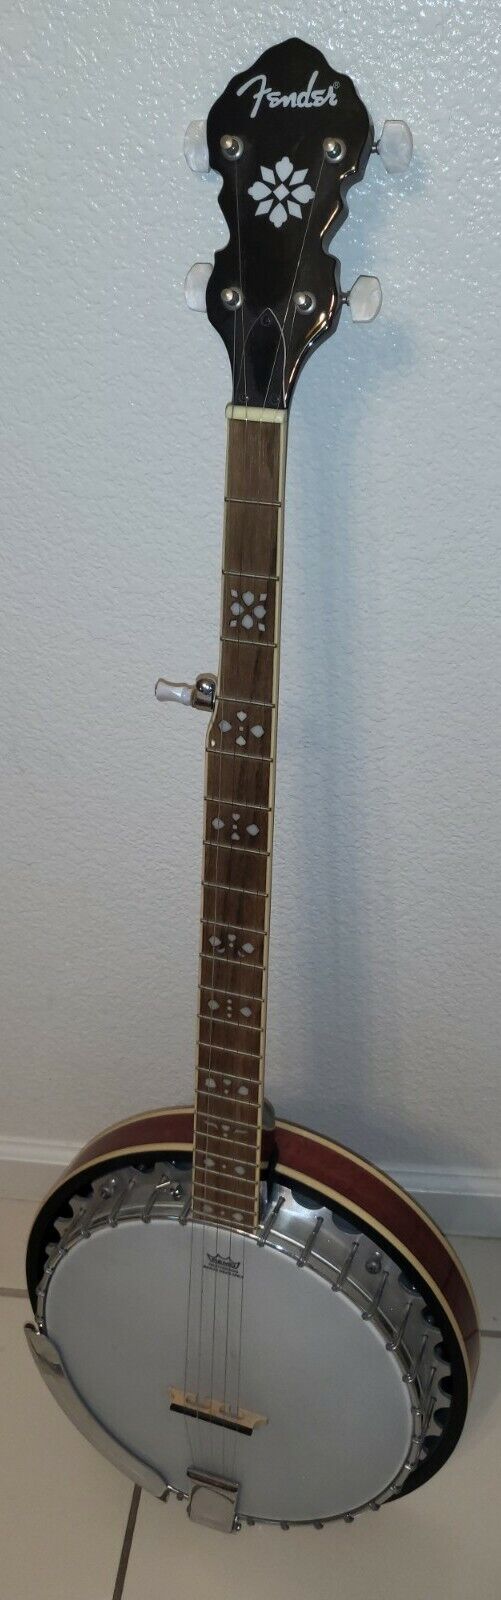 Fender 5 String Banjo